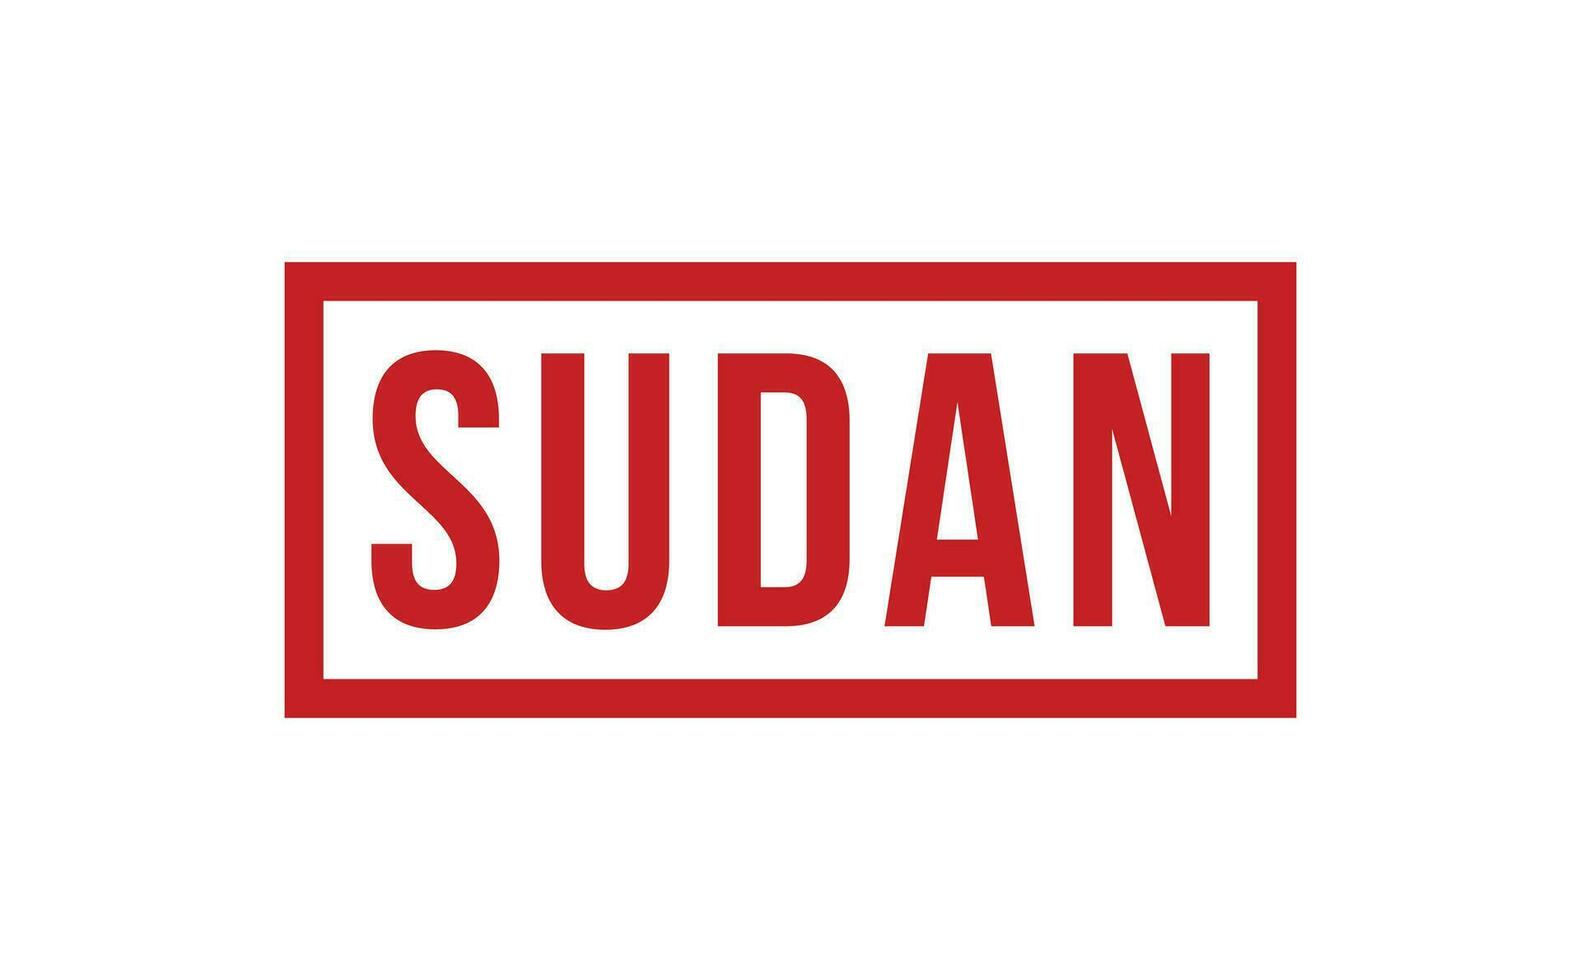 Sudan Gummi Briefmarke Siegel Vektor